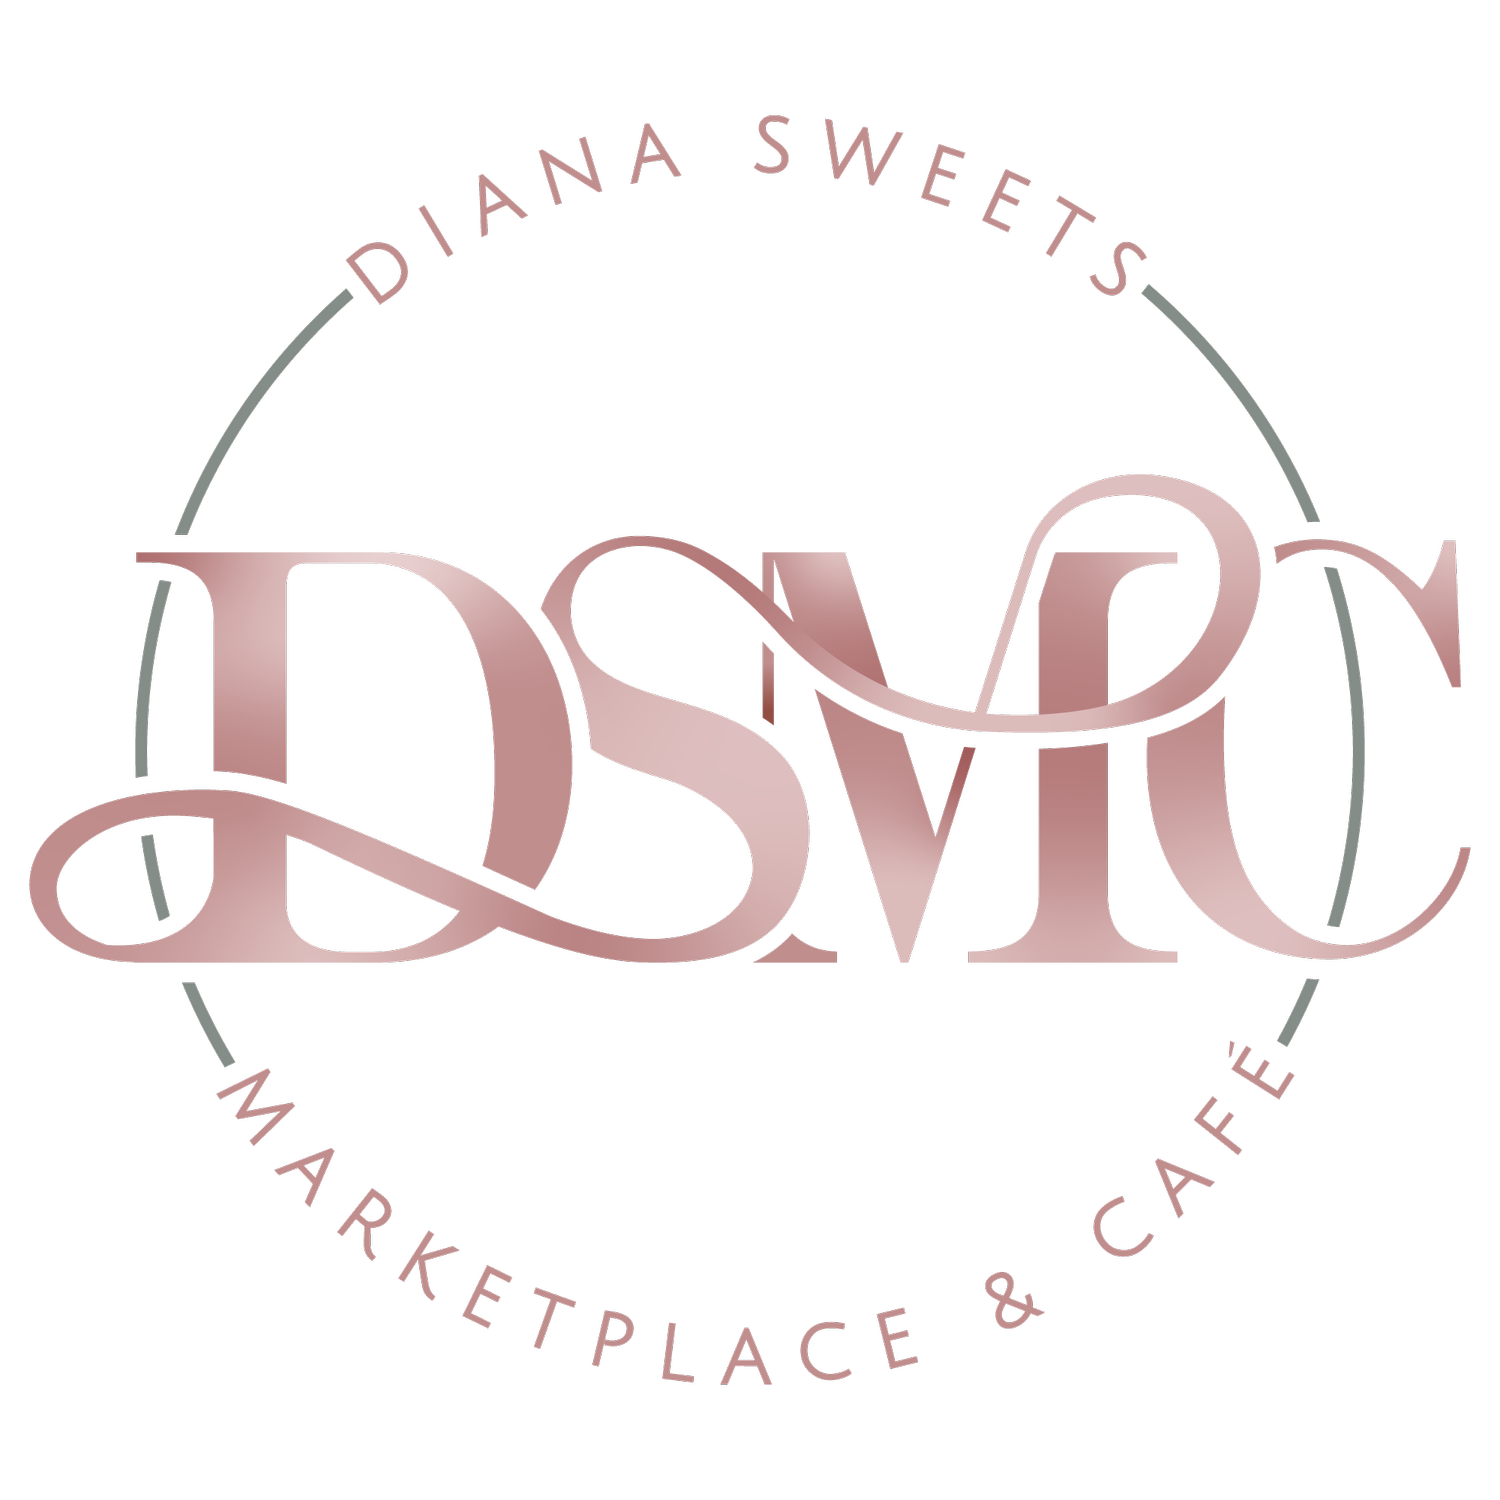 Diana Sweets Marketplace & Café